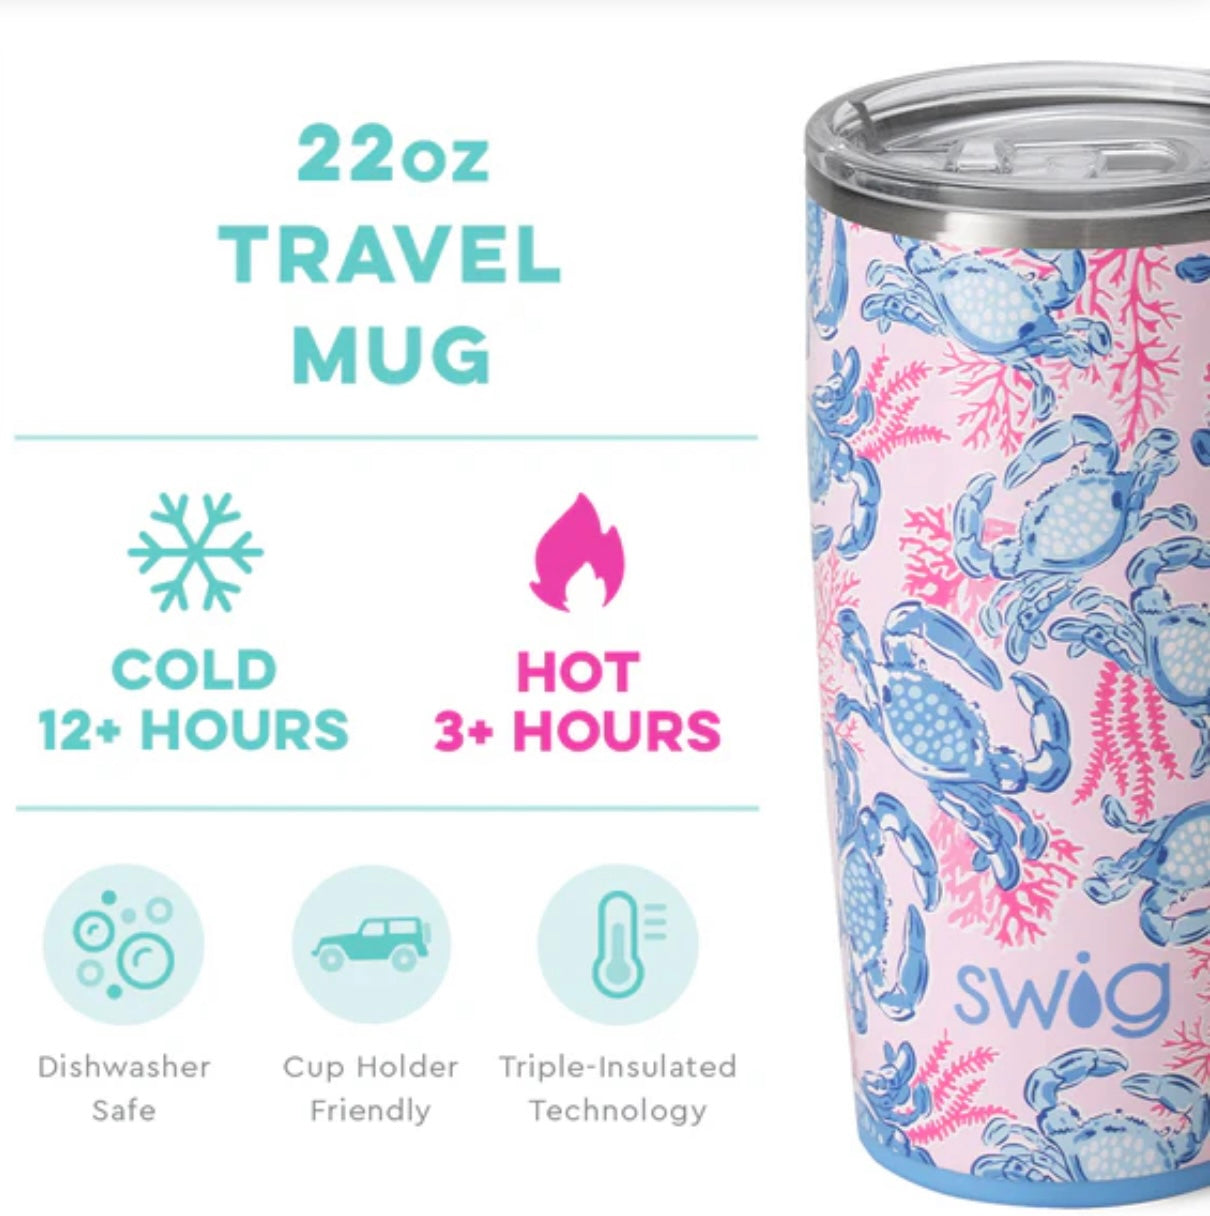 GET CRACKIN'
Travel Mug 22oz